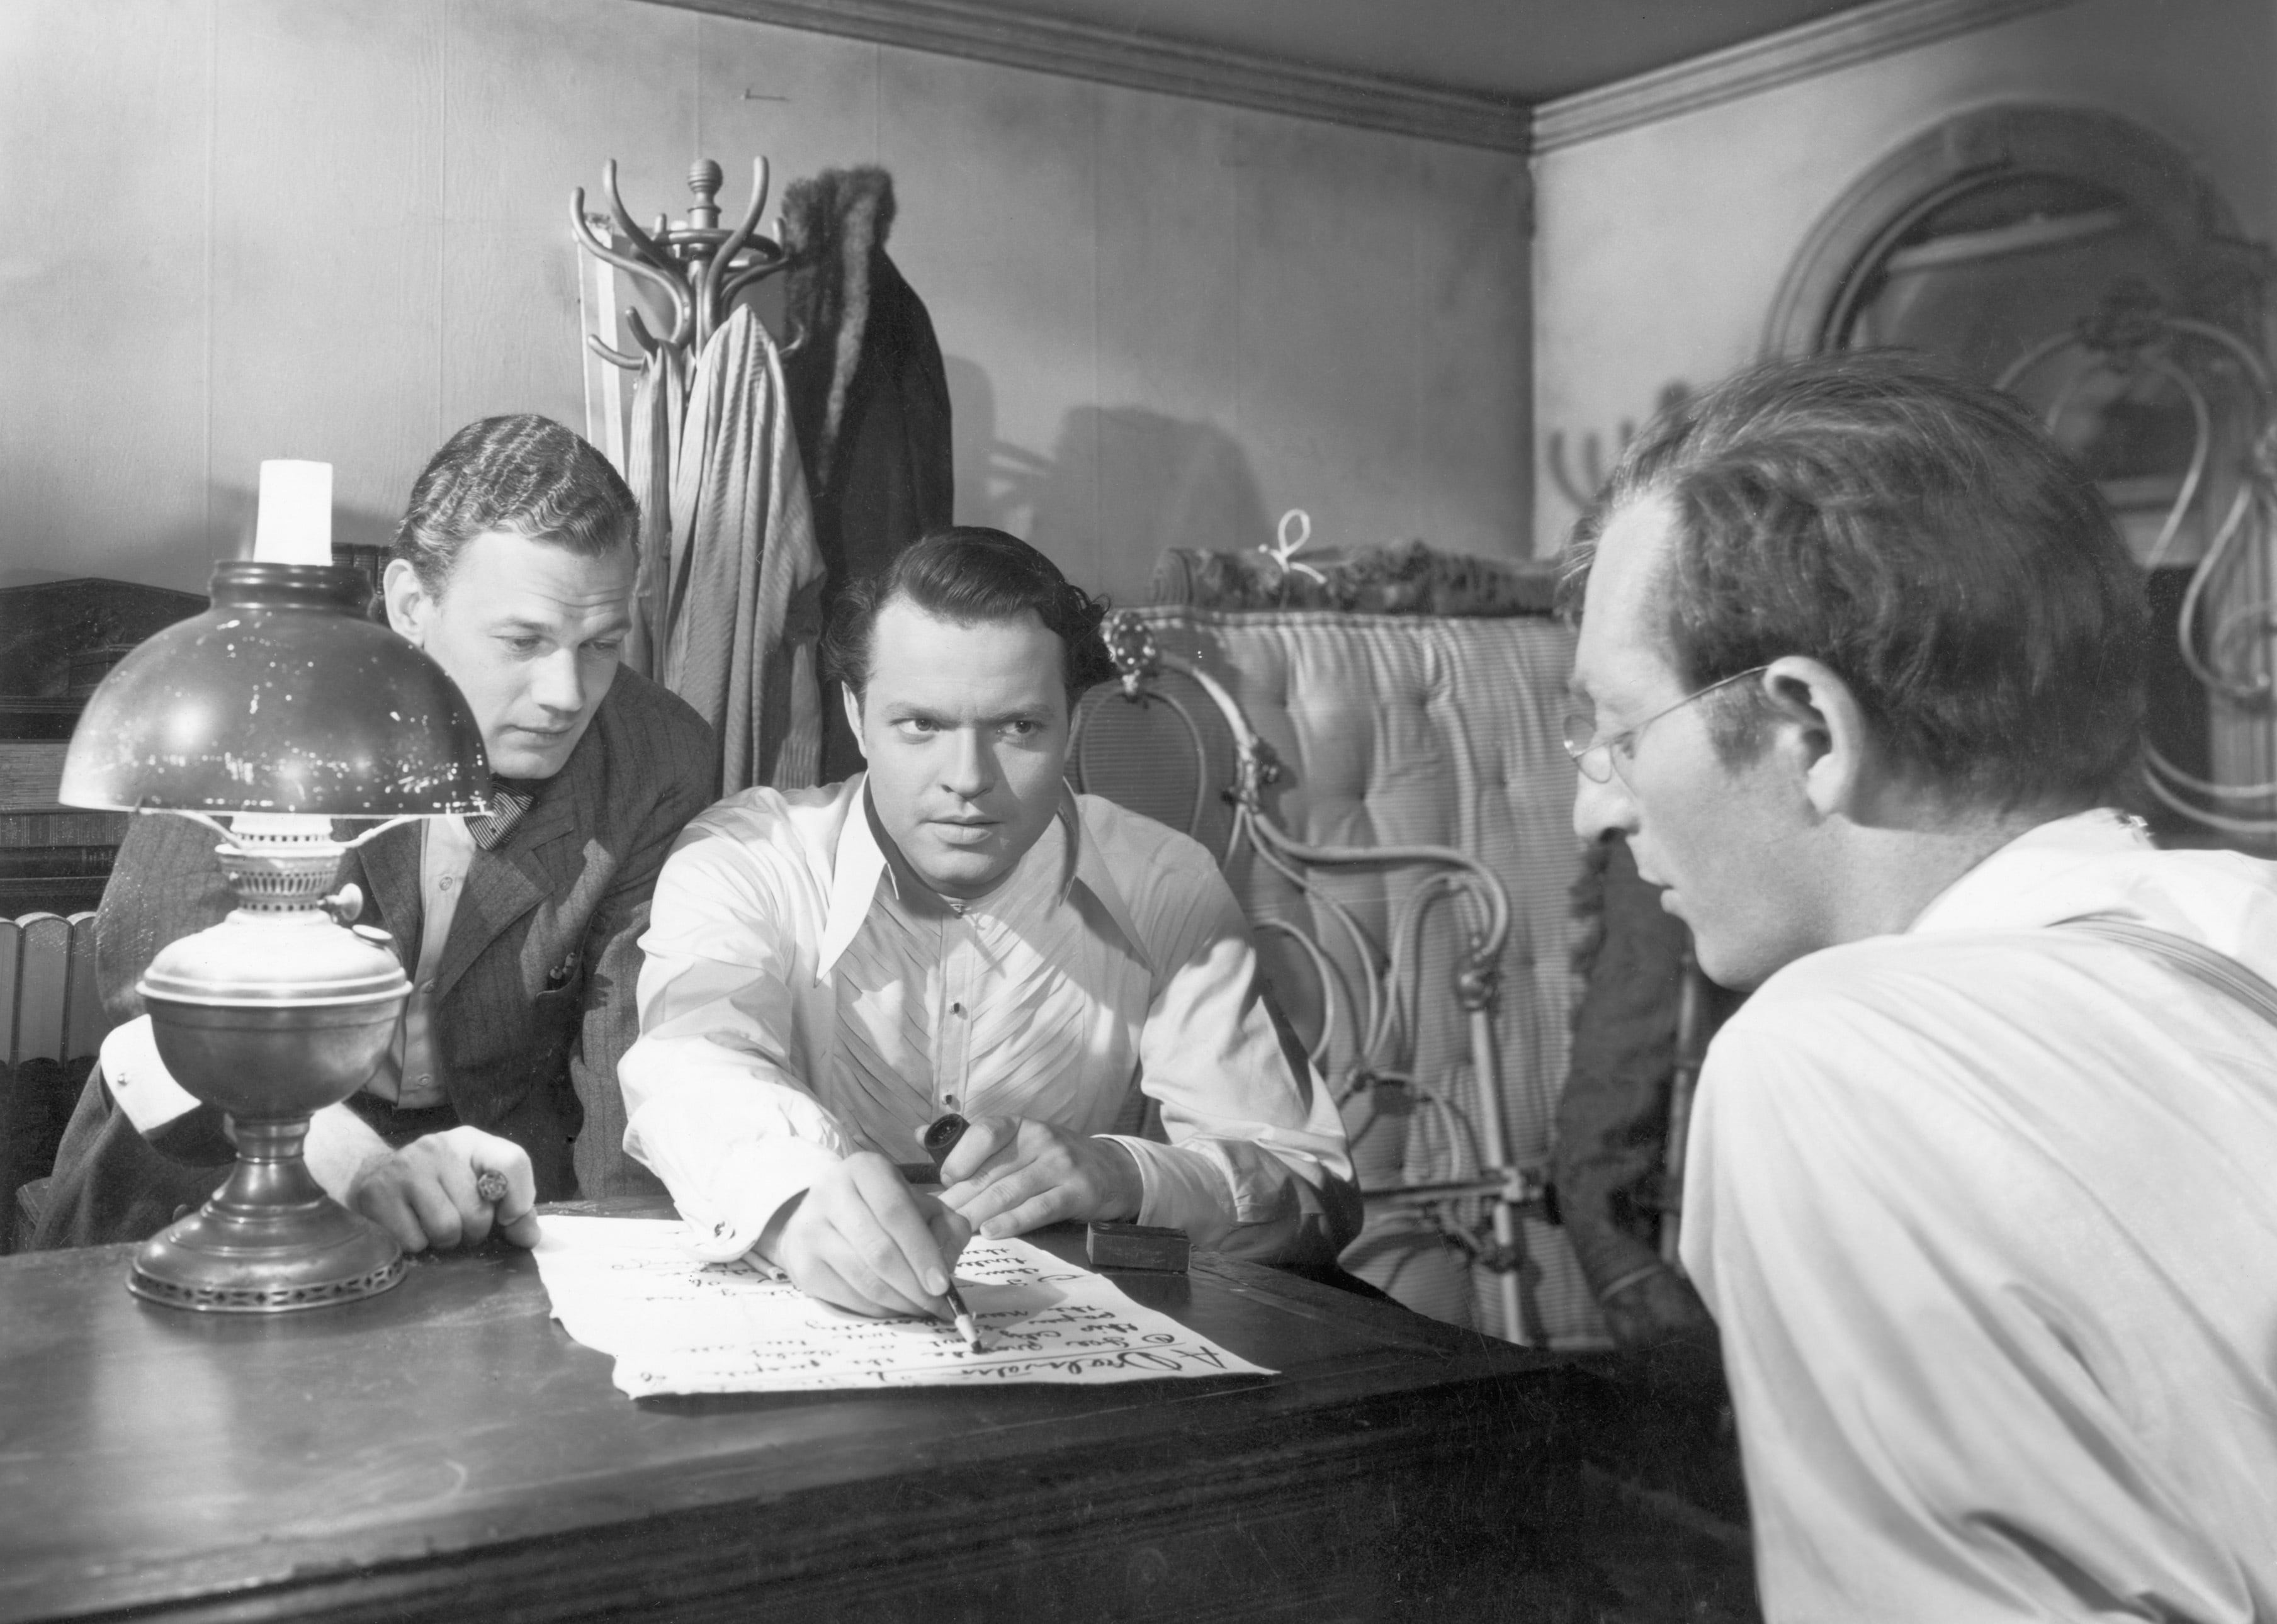 Orson Welles, entre Joseph Cotten (izquierda) y Everett Sloane en 'Ciudadano Kane'.